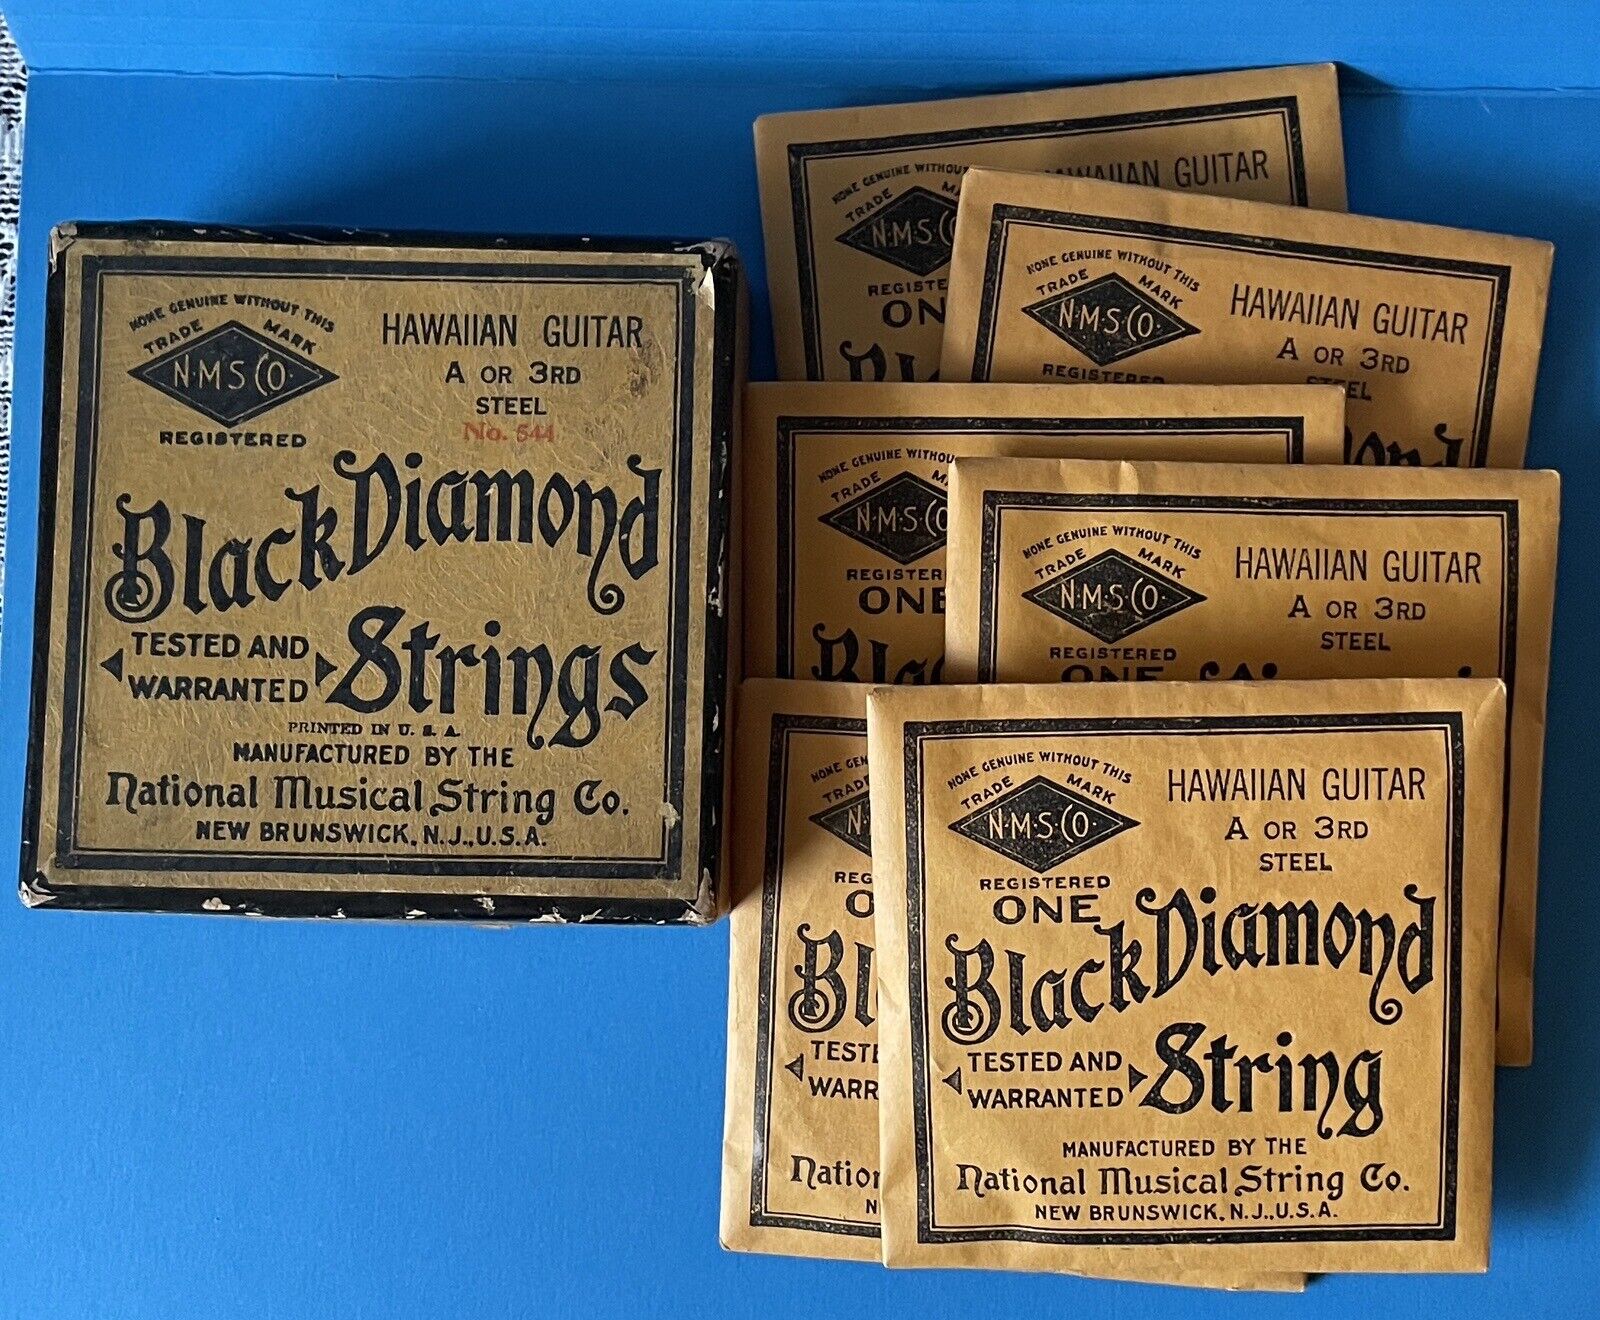 Vintage Black Diamond Hawaiian Guitar Strings A or 3rd Steel With Box No. 544